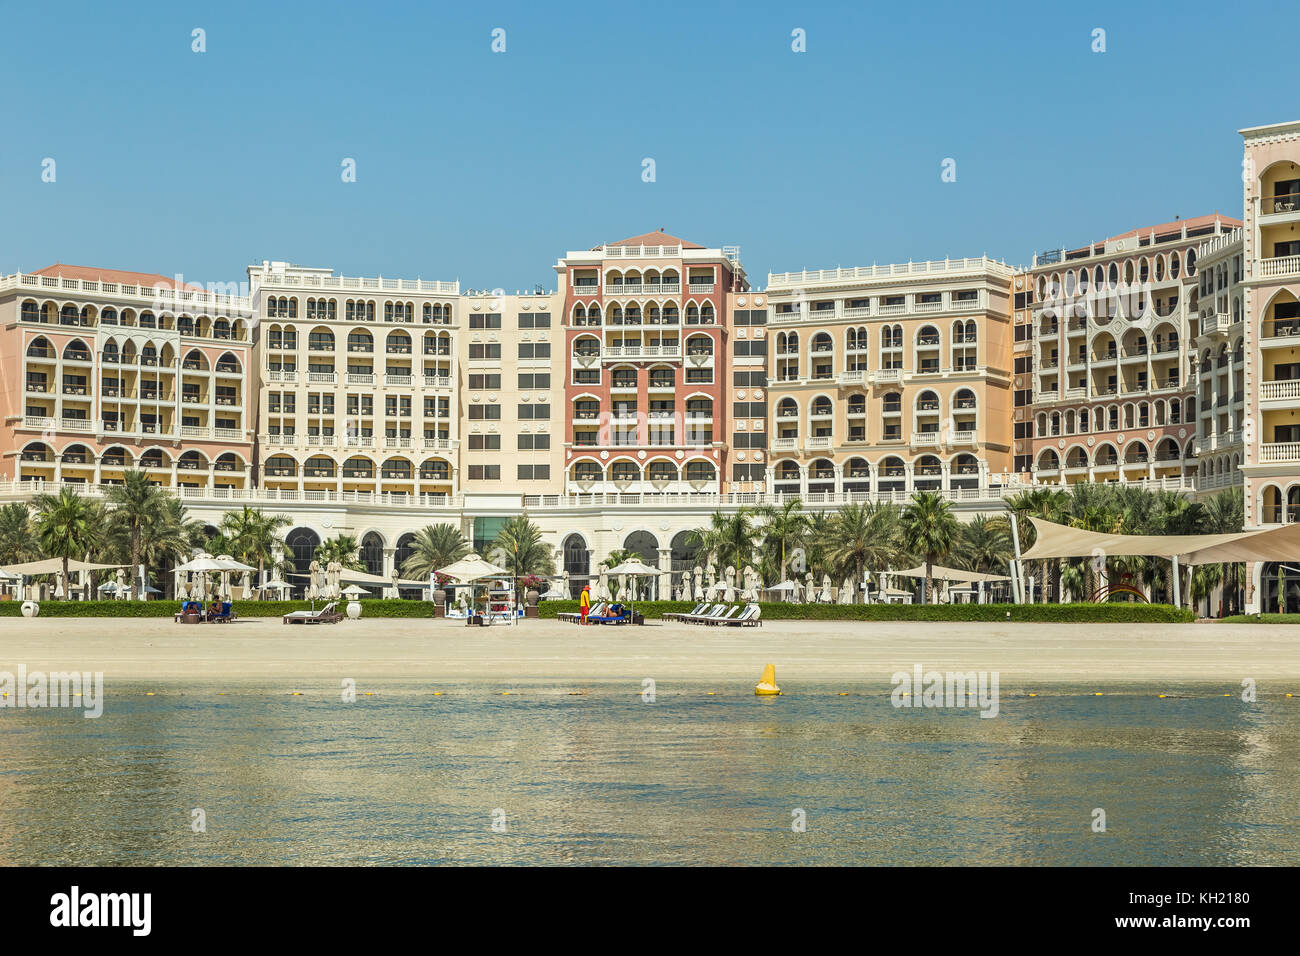 Abu Dhabi, United Arab Emirates, June 10, 2017: Ritz-Carlton Hotel Stock Photo